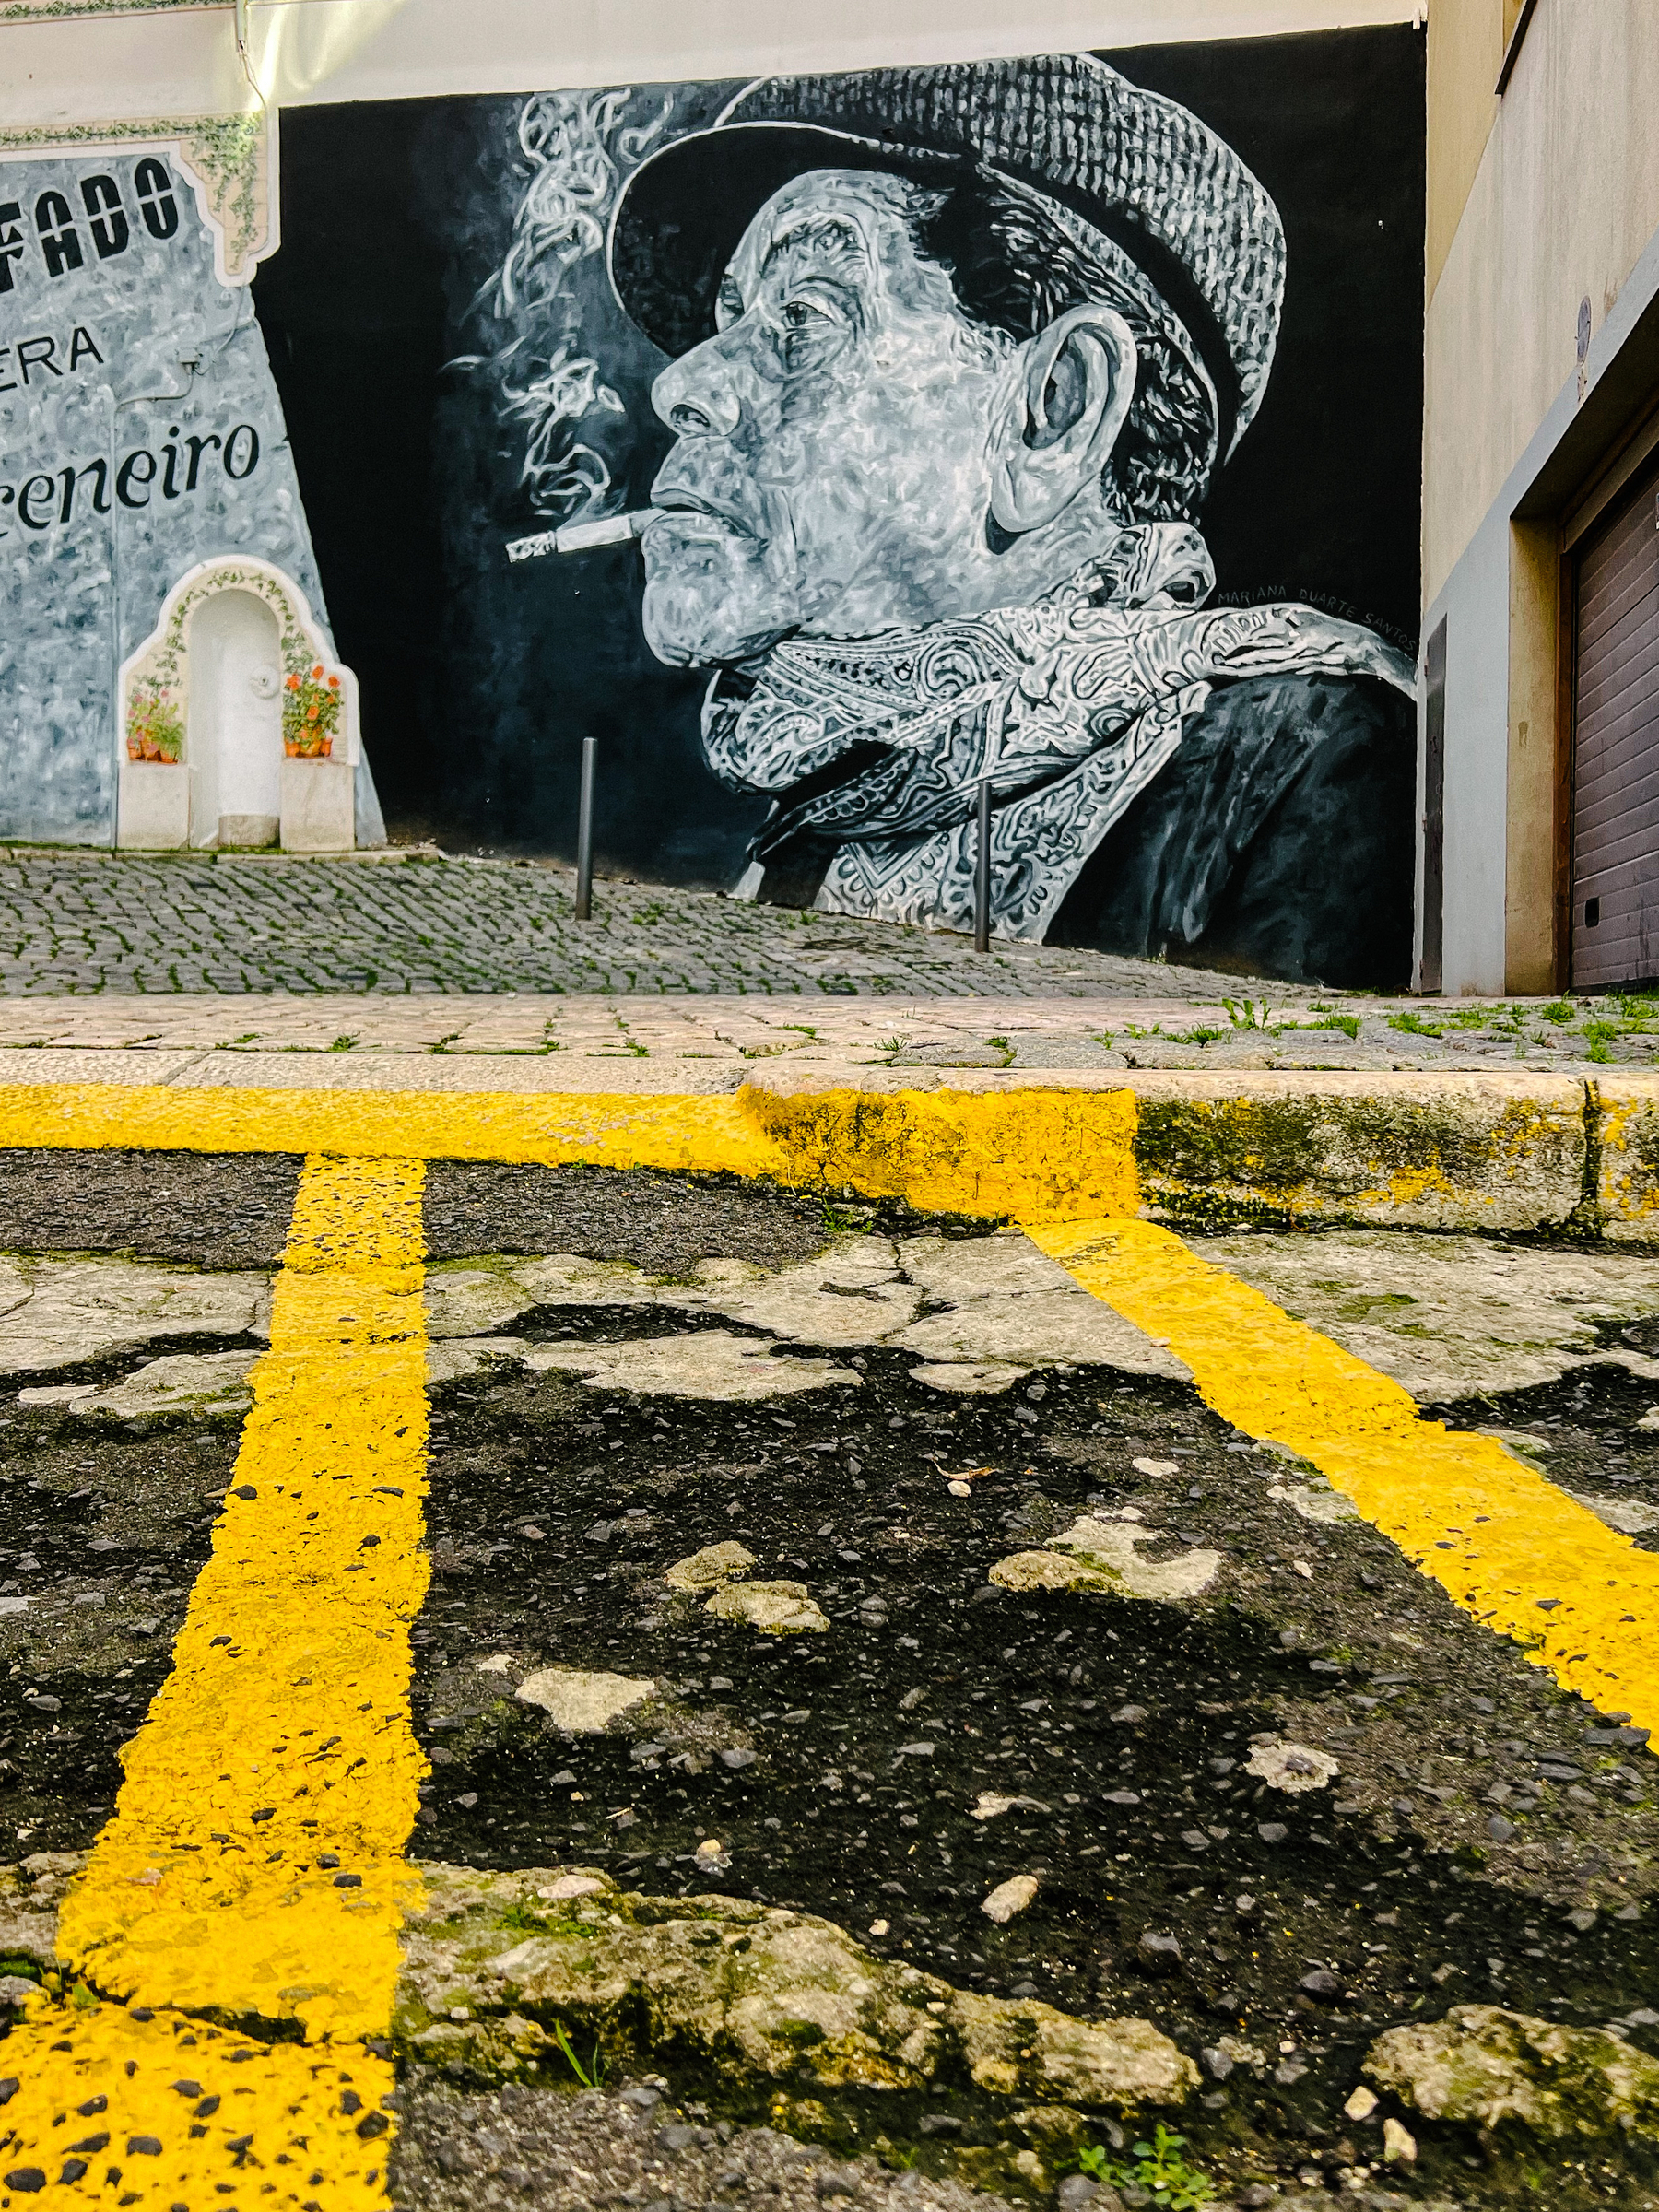 graffiti depicting Alfredo Marceneiro, a fado singer